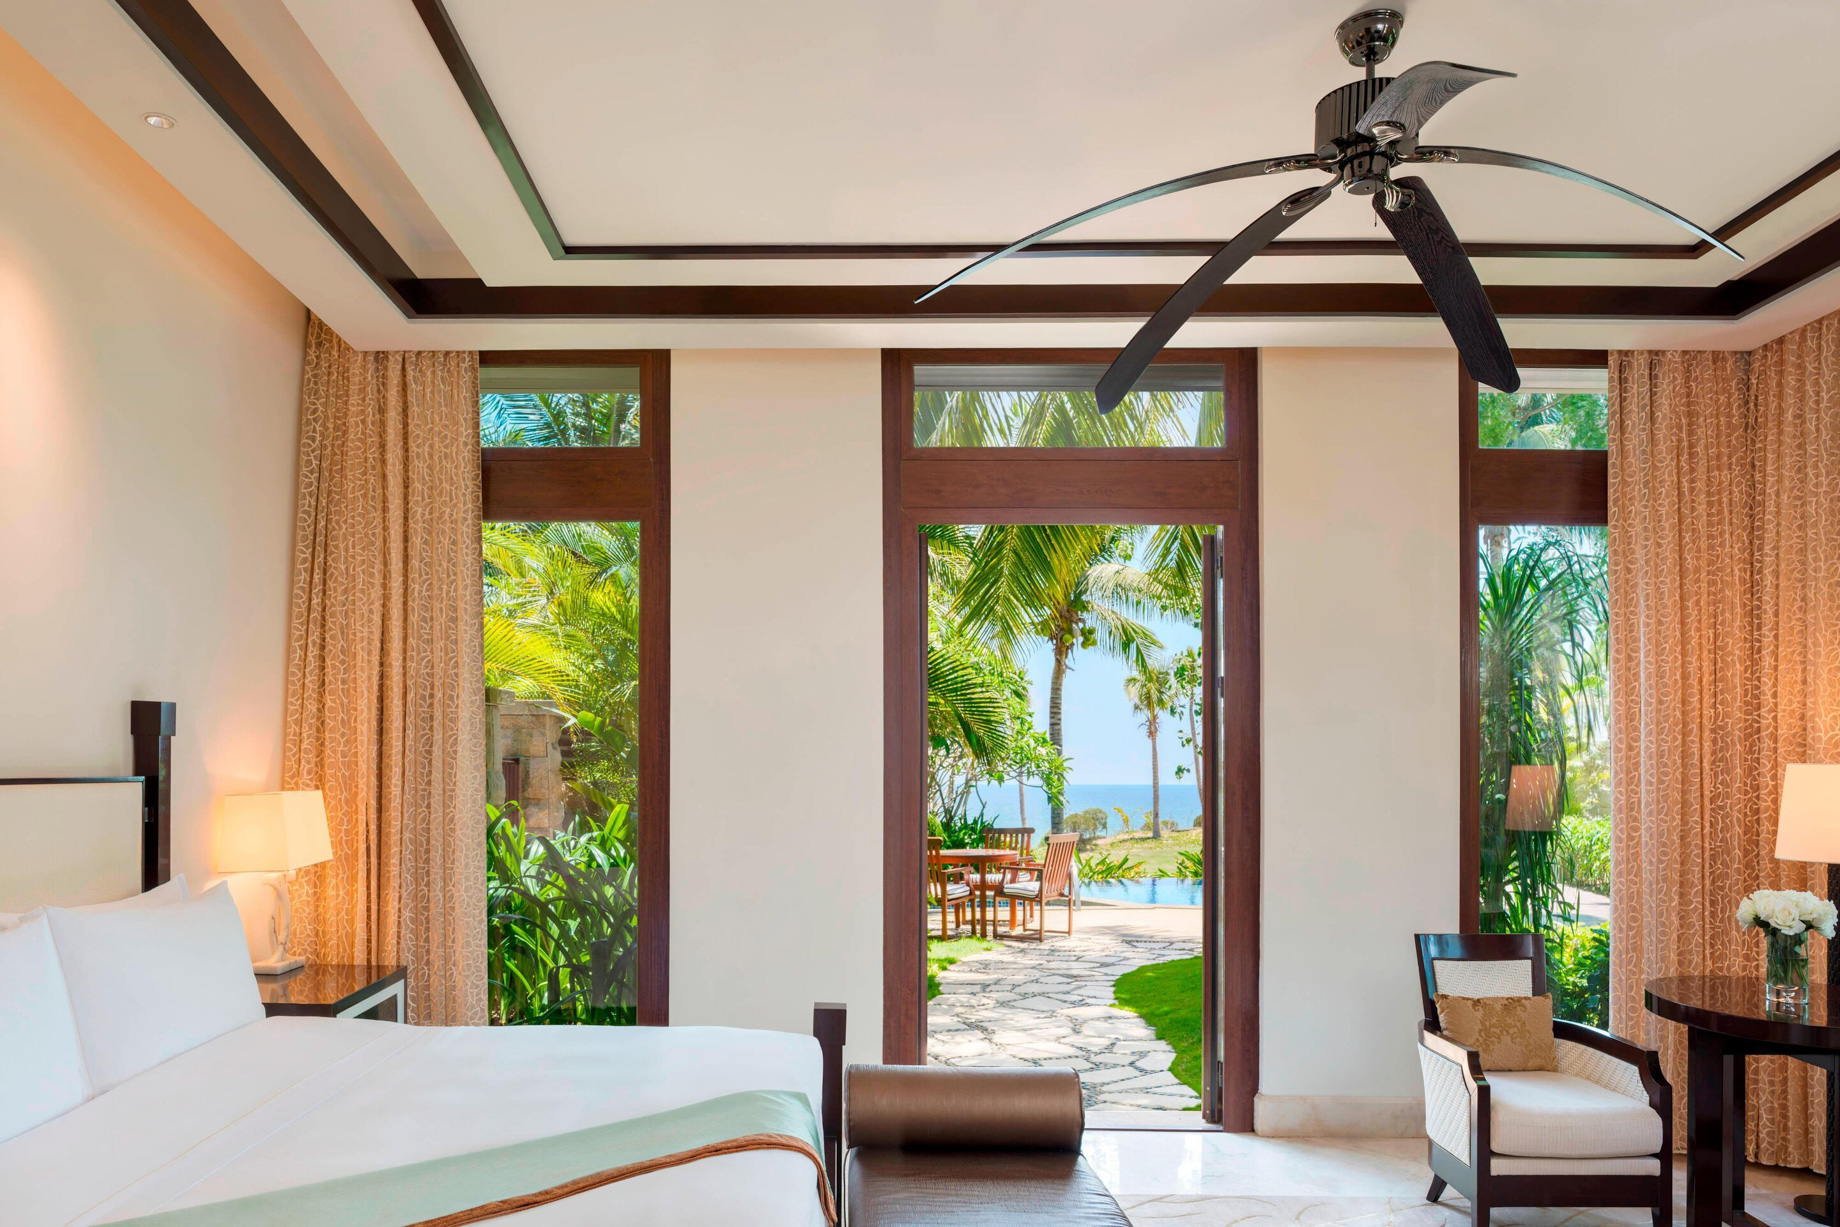 The St. Regis Sanya Yalong Bay Resort – Hainan, China – Seaside One Bedroom Villa King Bedroom View